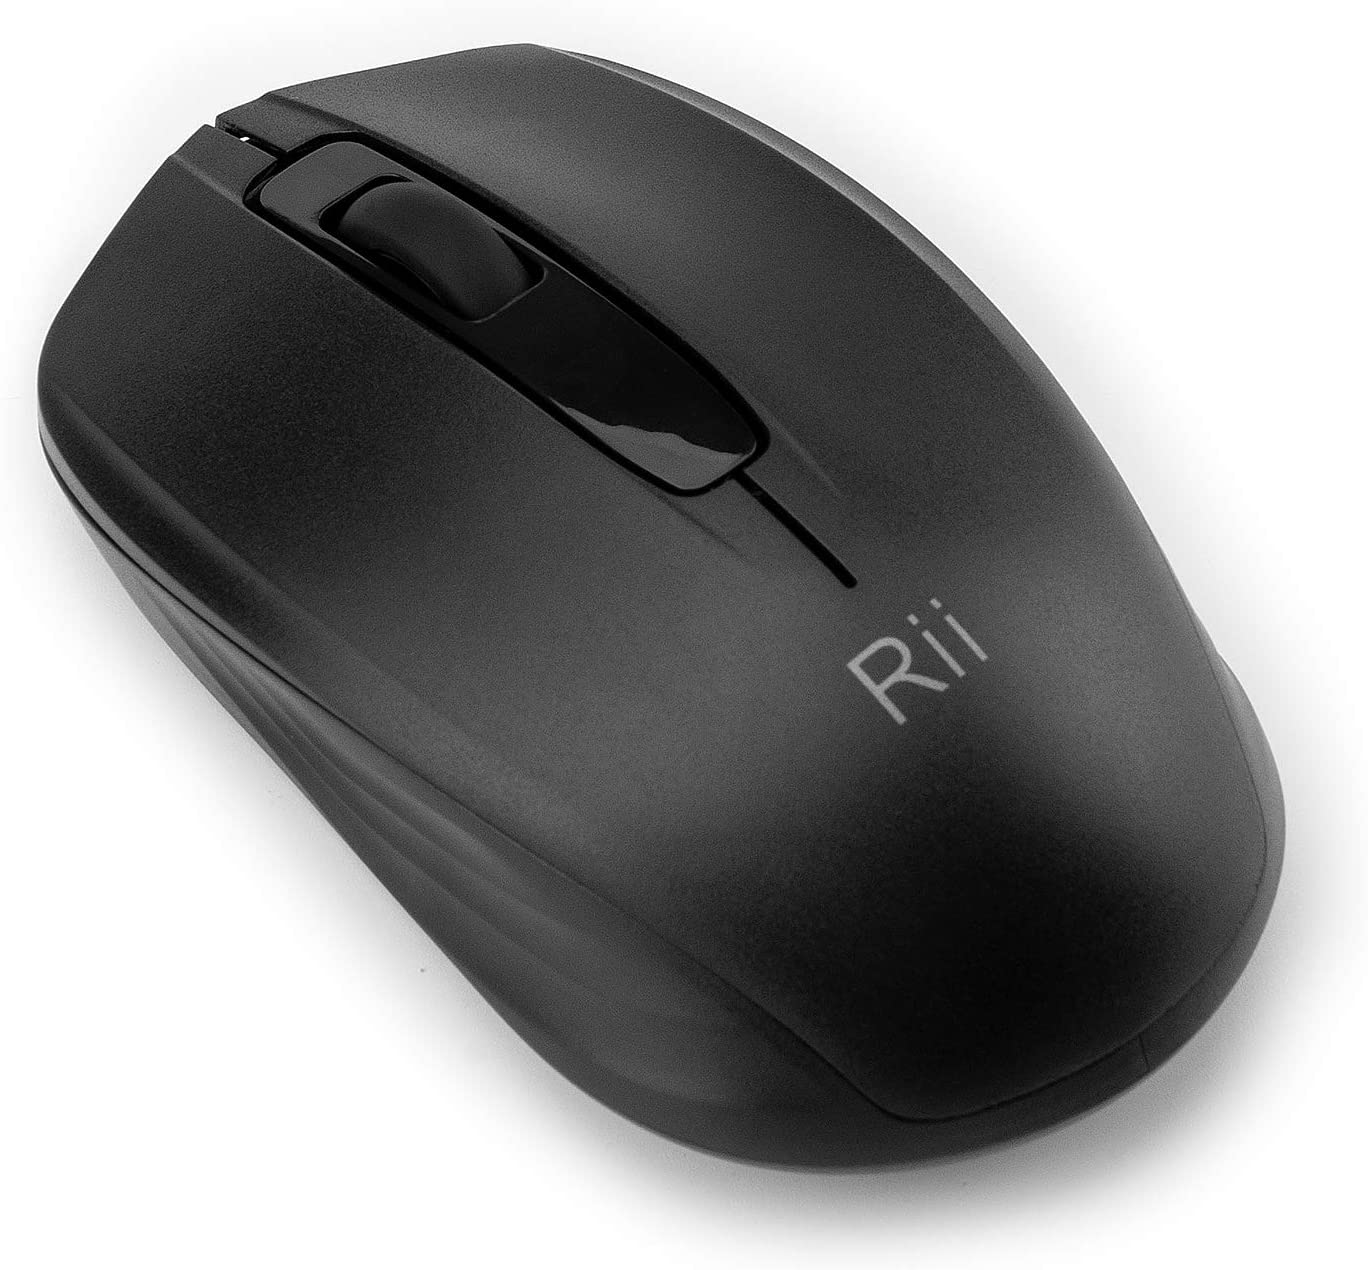 Rii Wireless Mouse,2.4G USB Wireless Mice 1000 DPI Optical PC Laptop